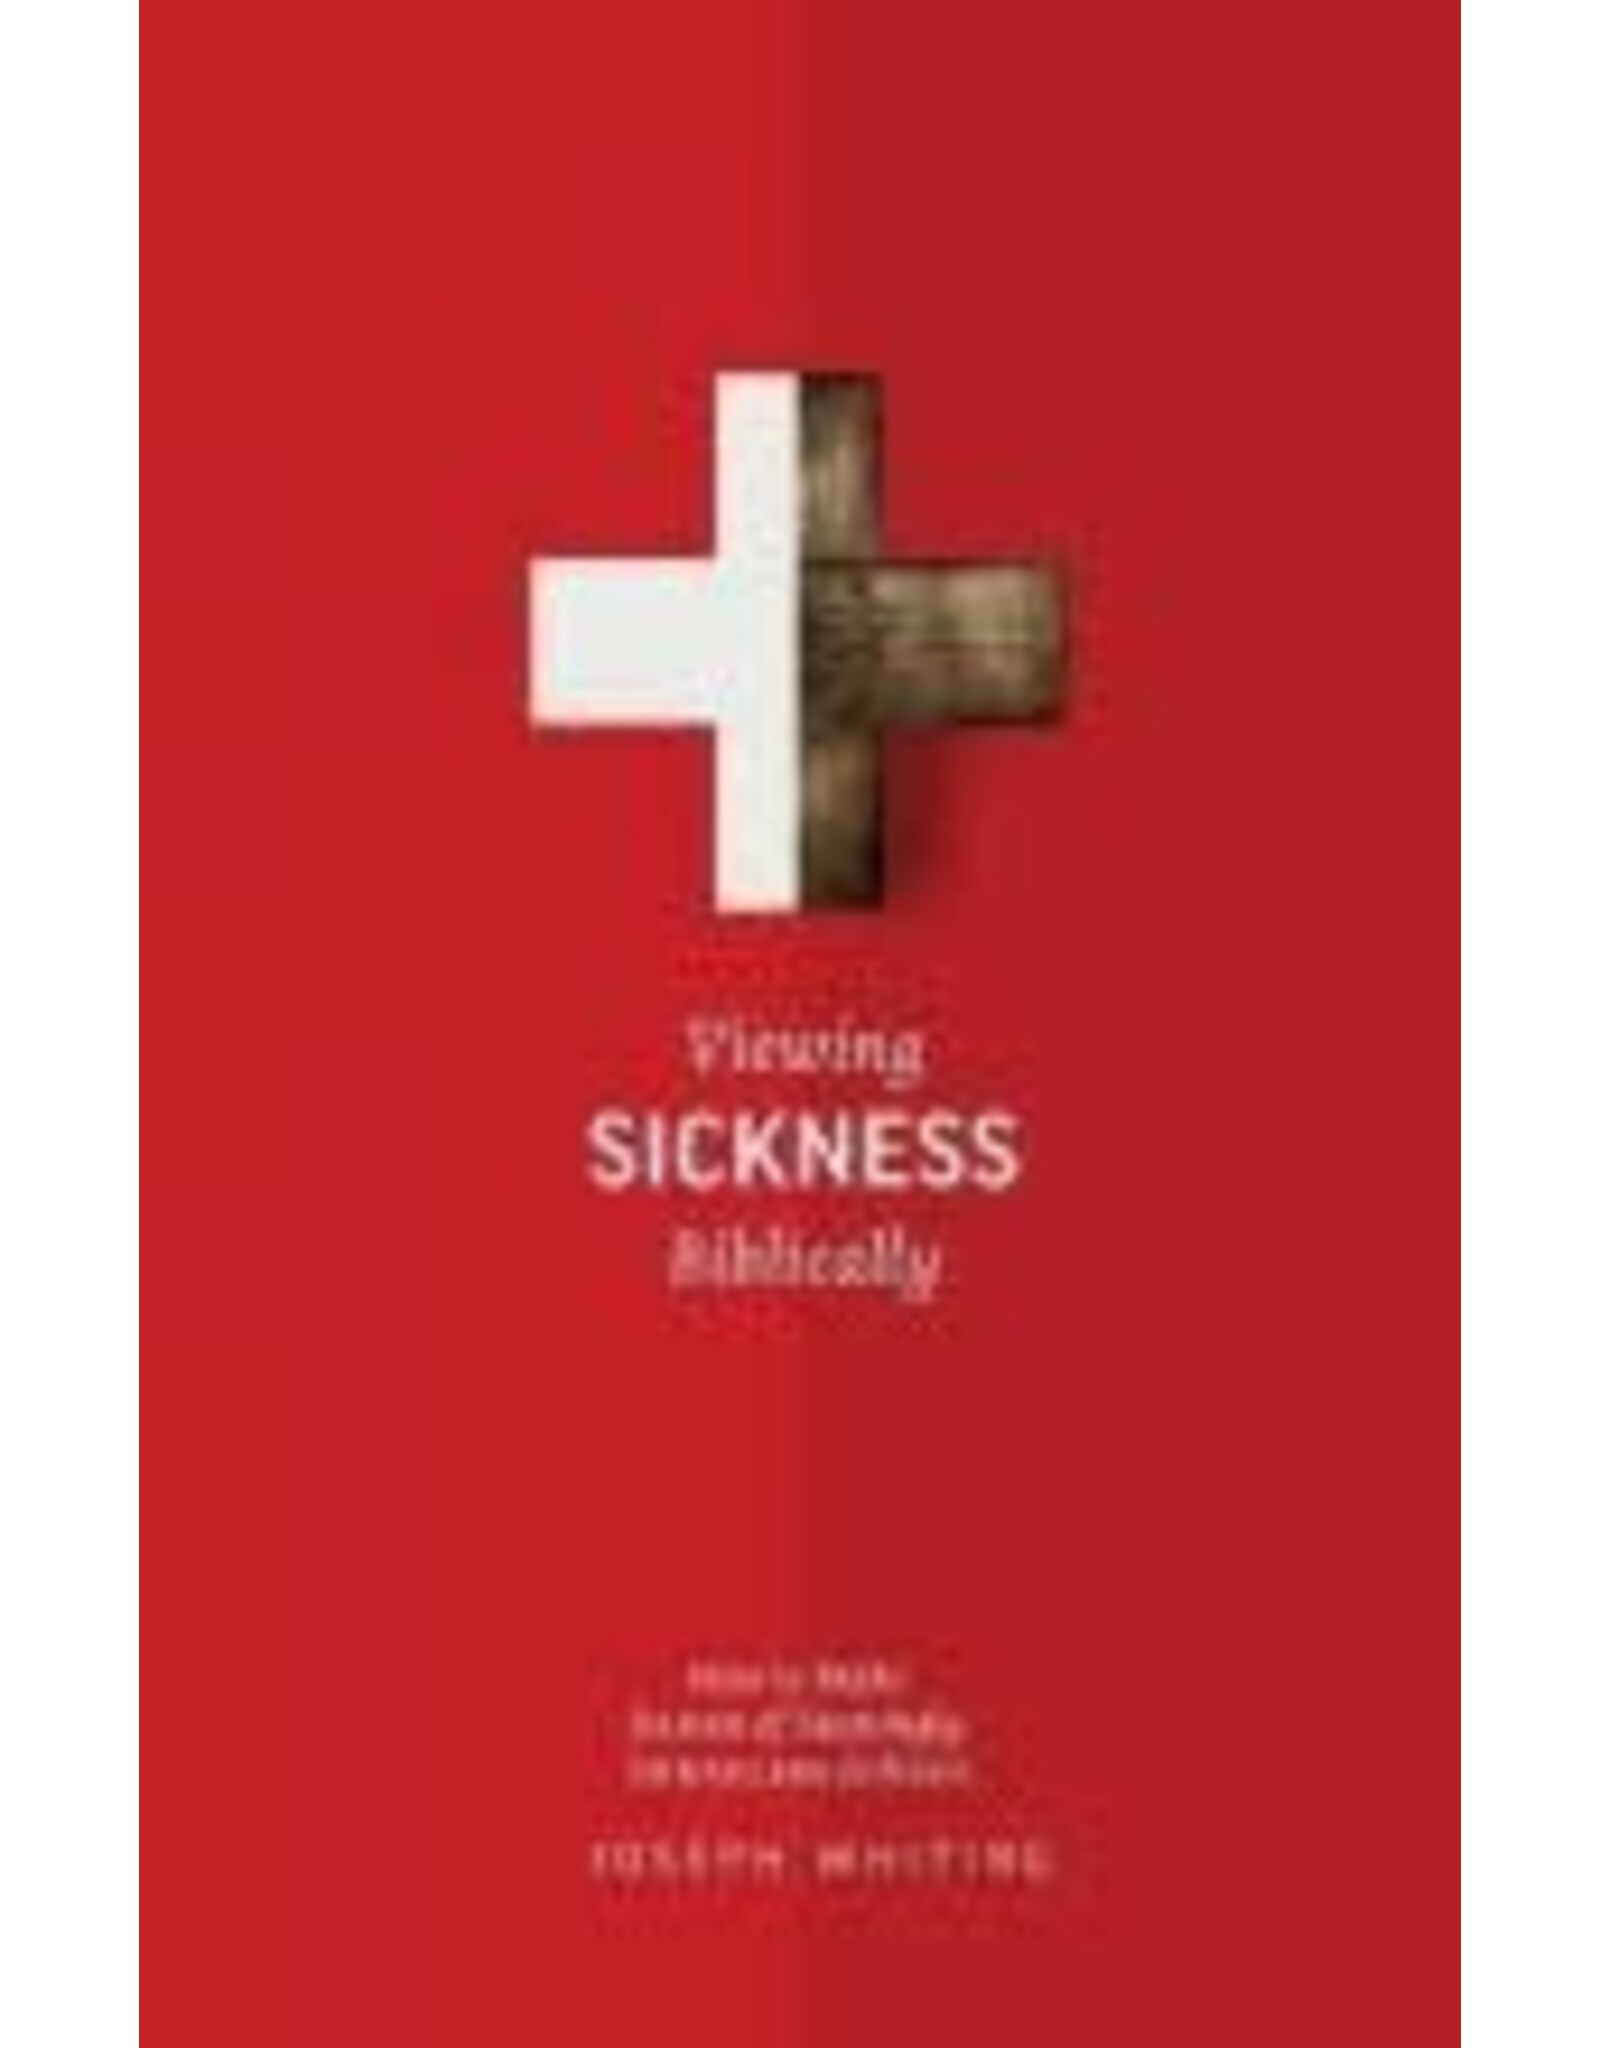 Joseph Whiting Viewing Sickness Biblically: Making Sense of Seemingly Senseless Sickness